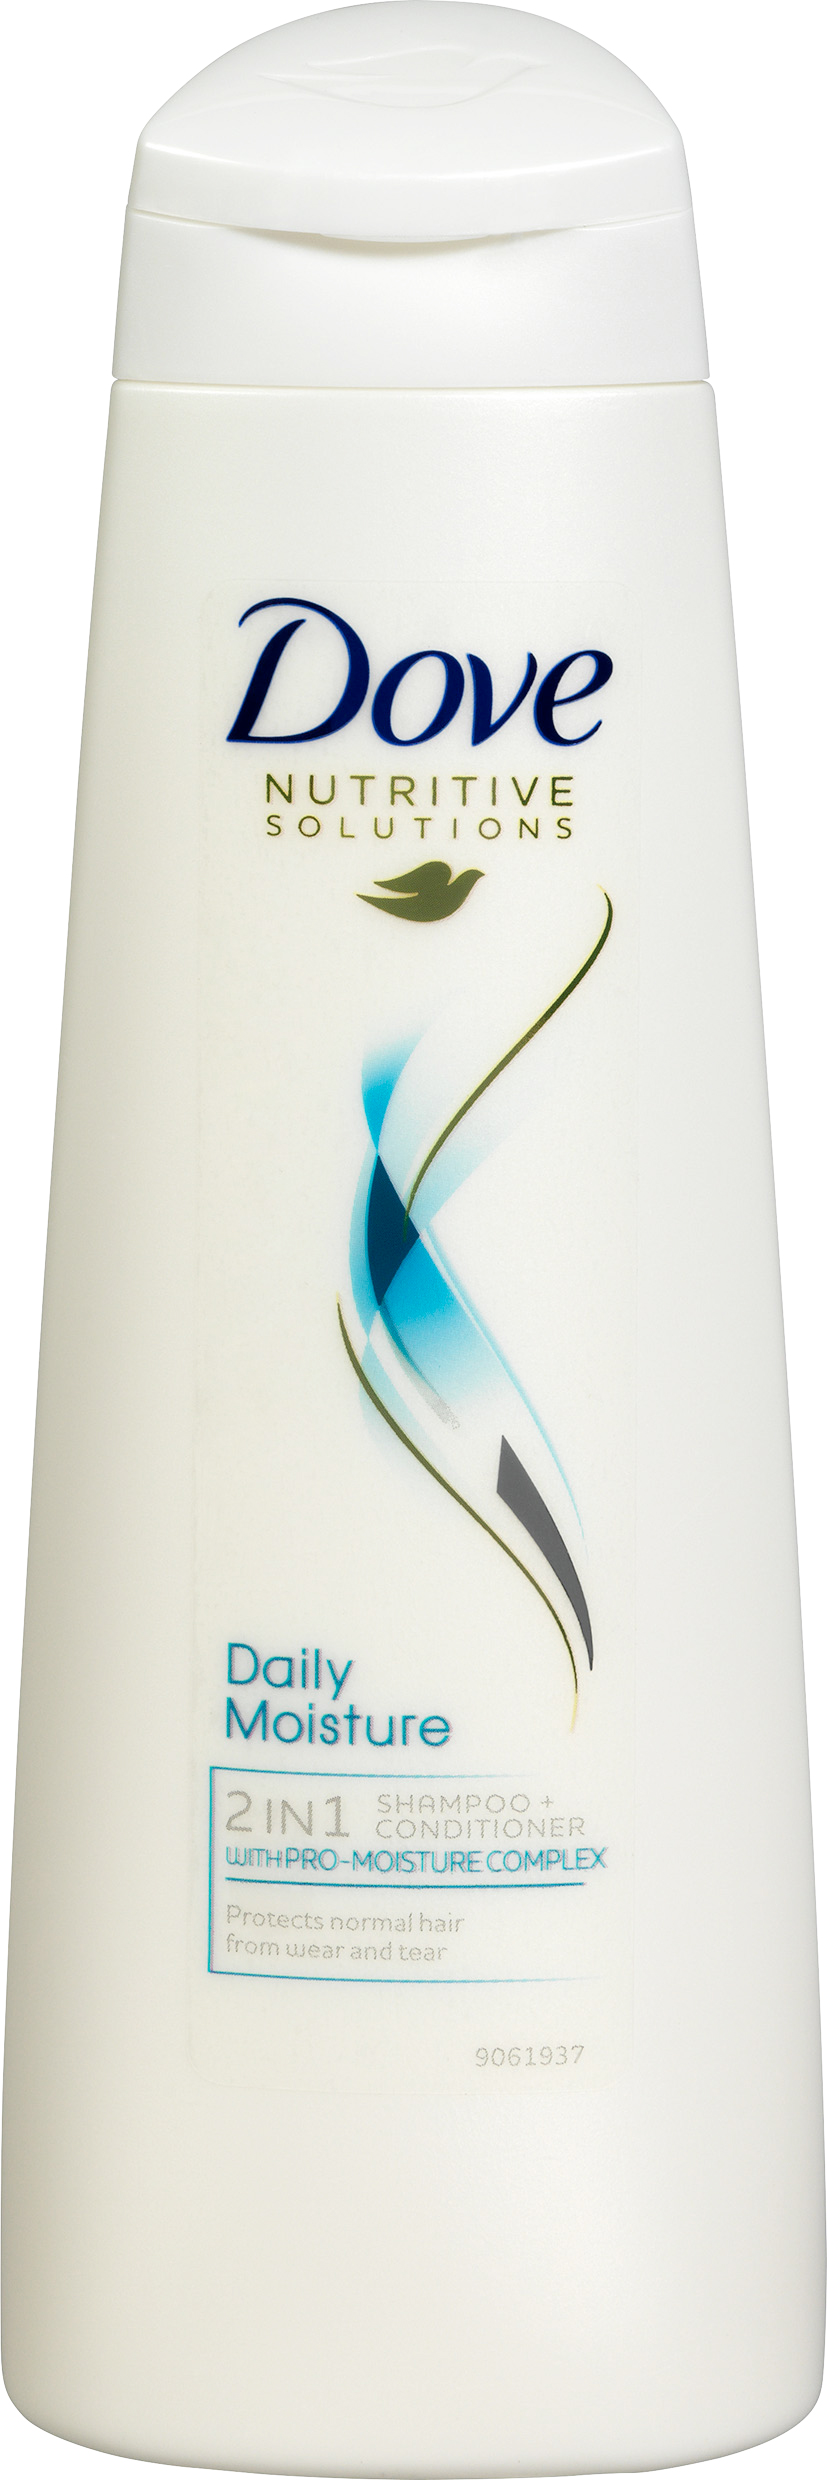 Dove 2in1 Daily Moisture Shampoo 250ml